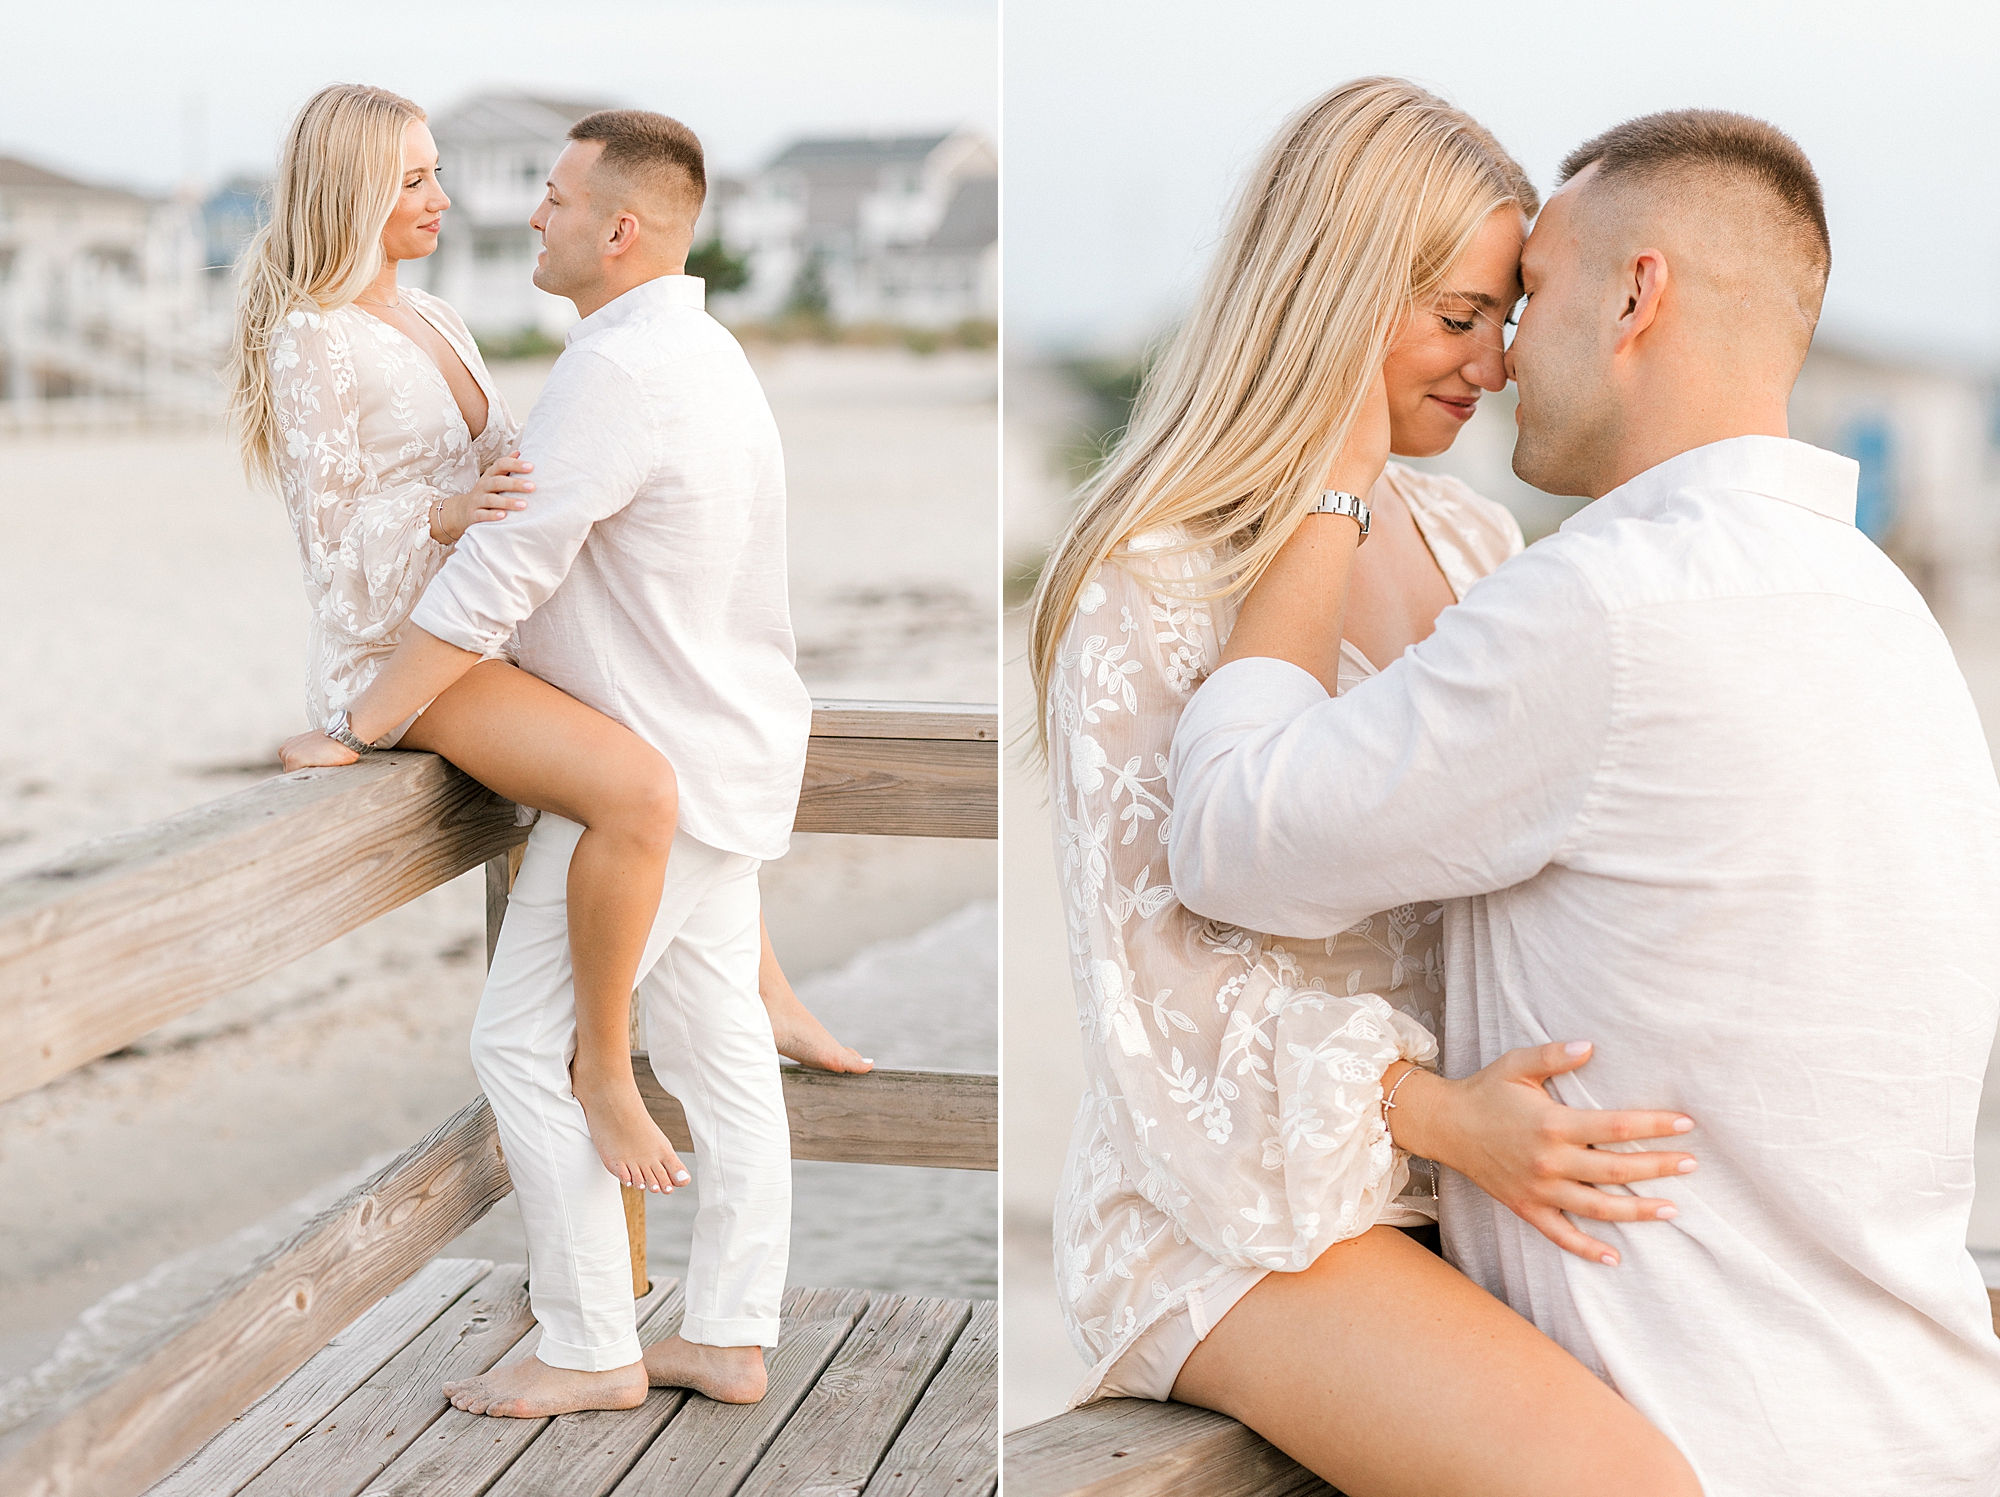 man kisses blonde woman on wooden railing of dock in Lavallette NJ